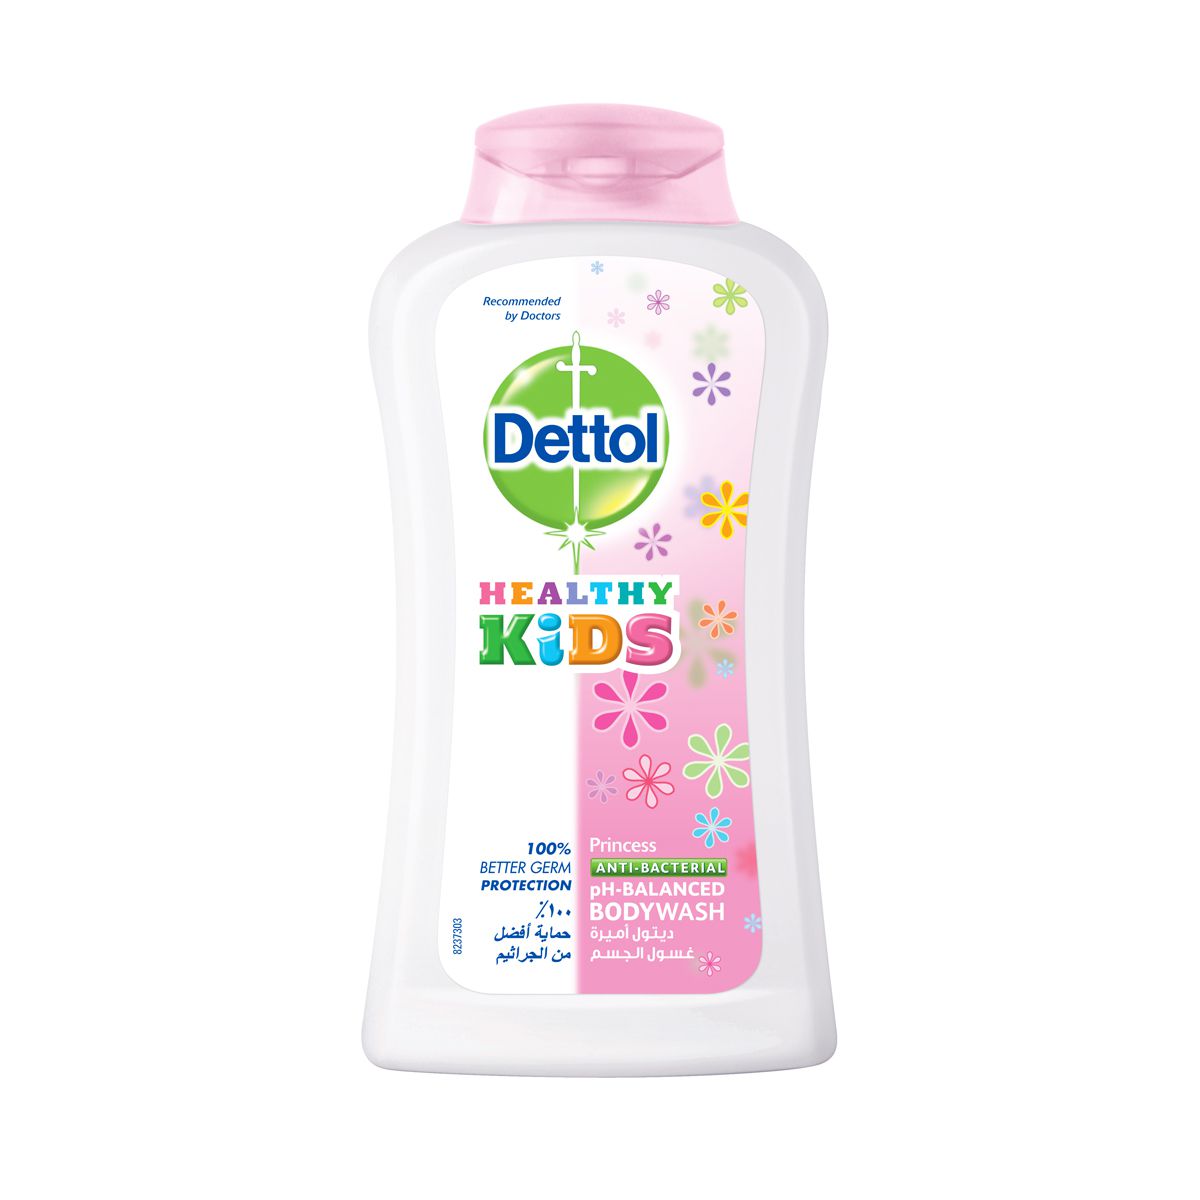 antibacterial soap for baby